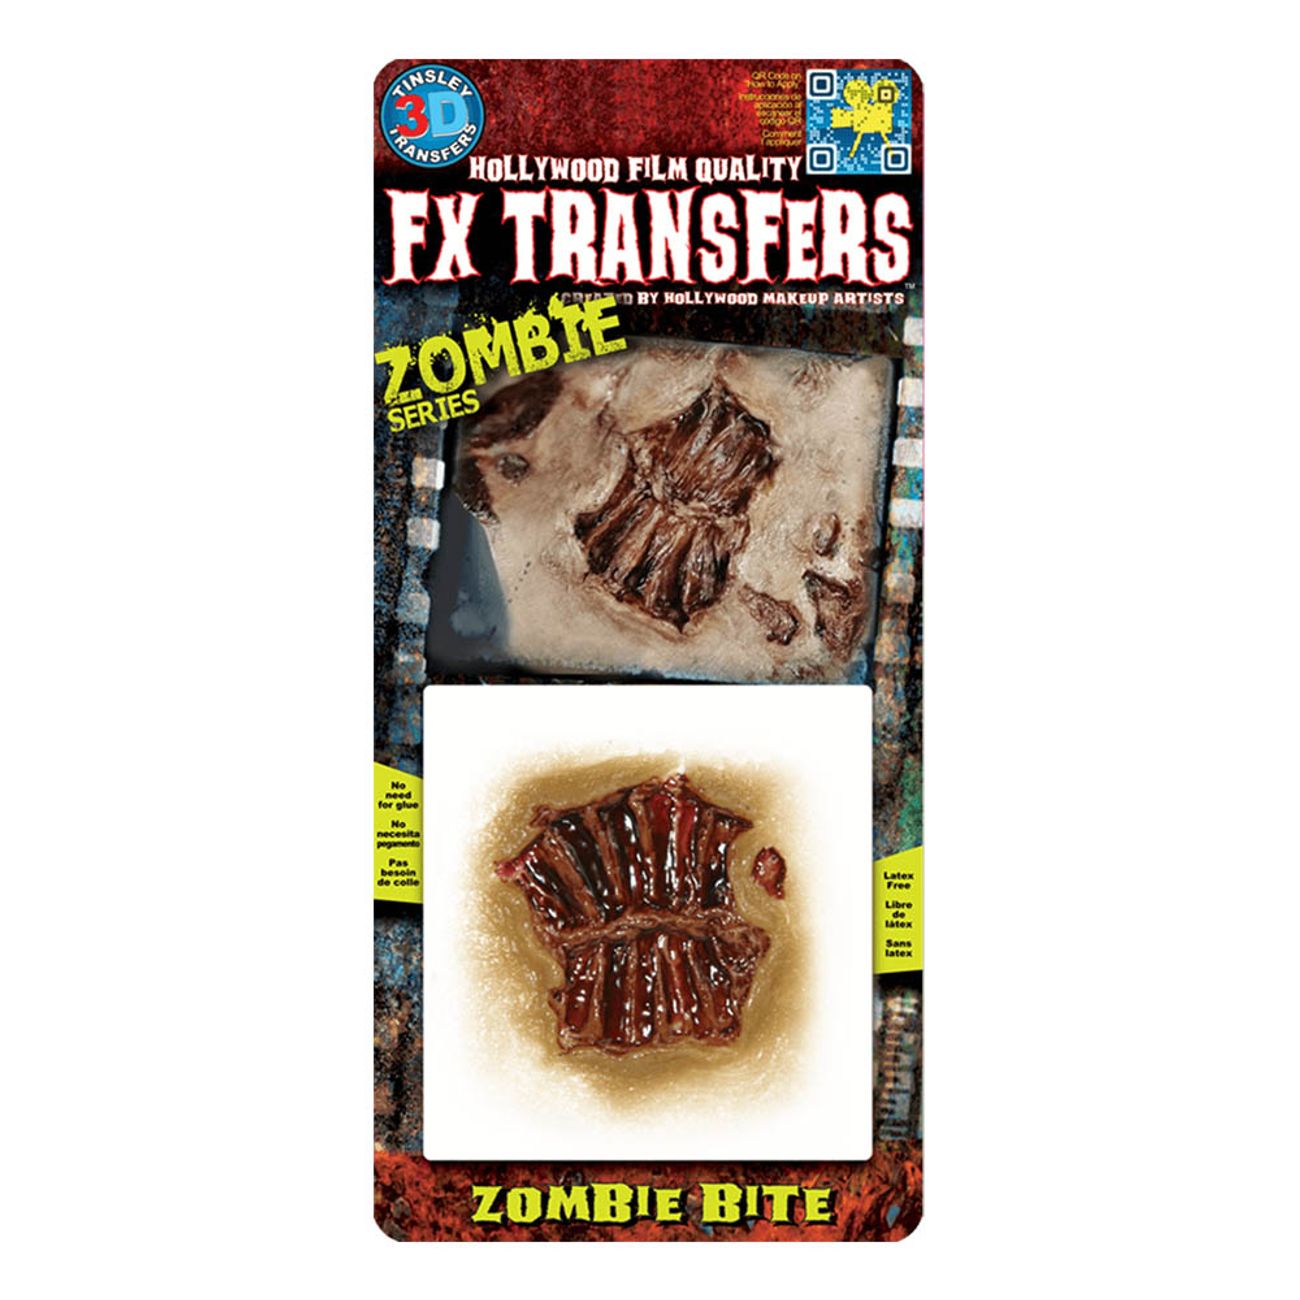 fx-transfers-zombie-bite-1